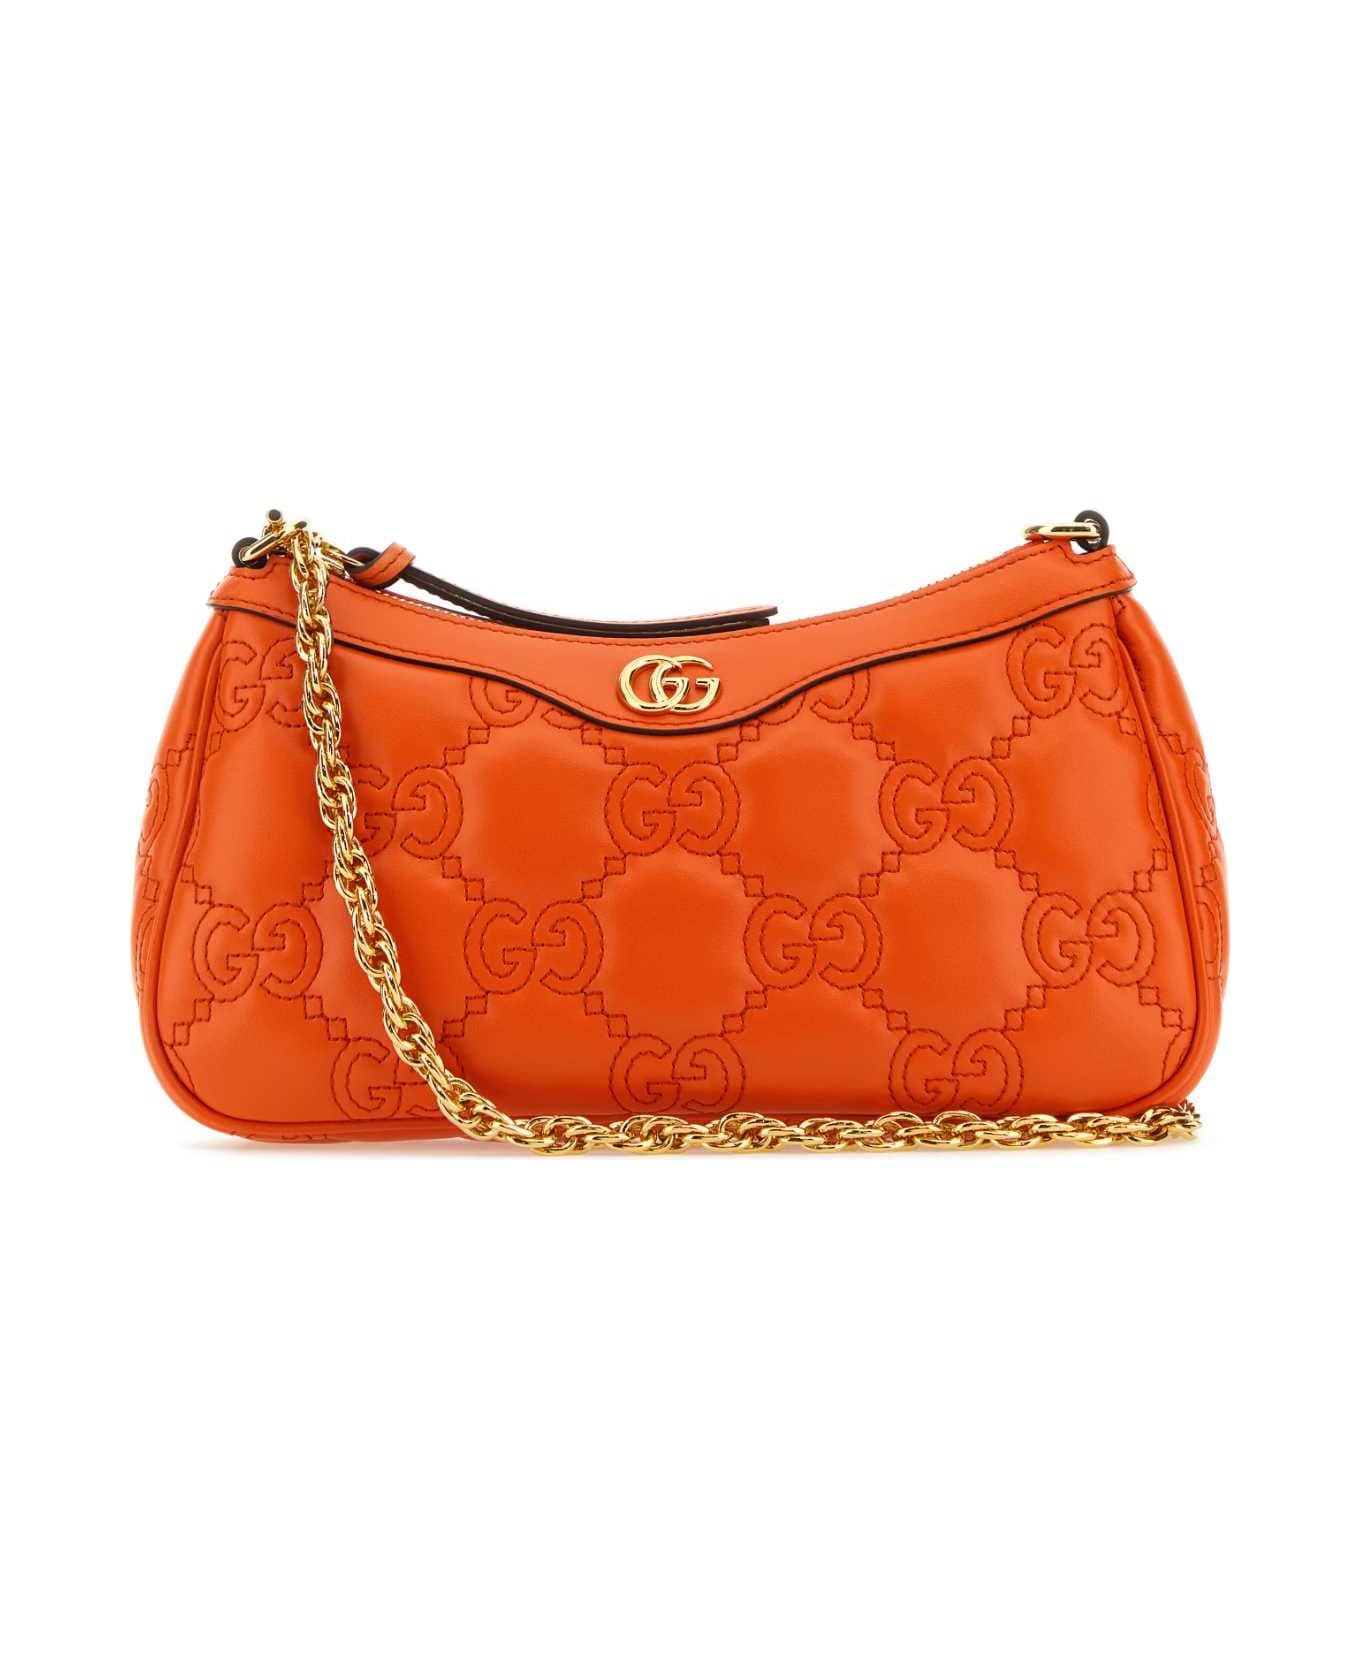 Gucci Orange Leather Handbag - DPORANGENATURAL ショルダーバッグ